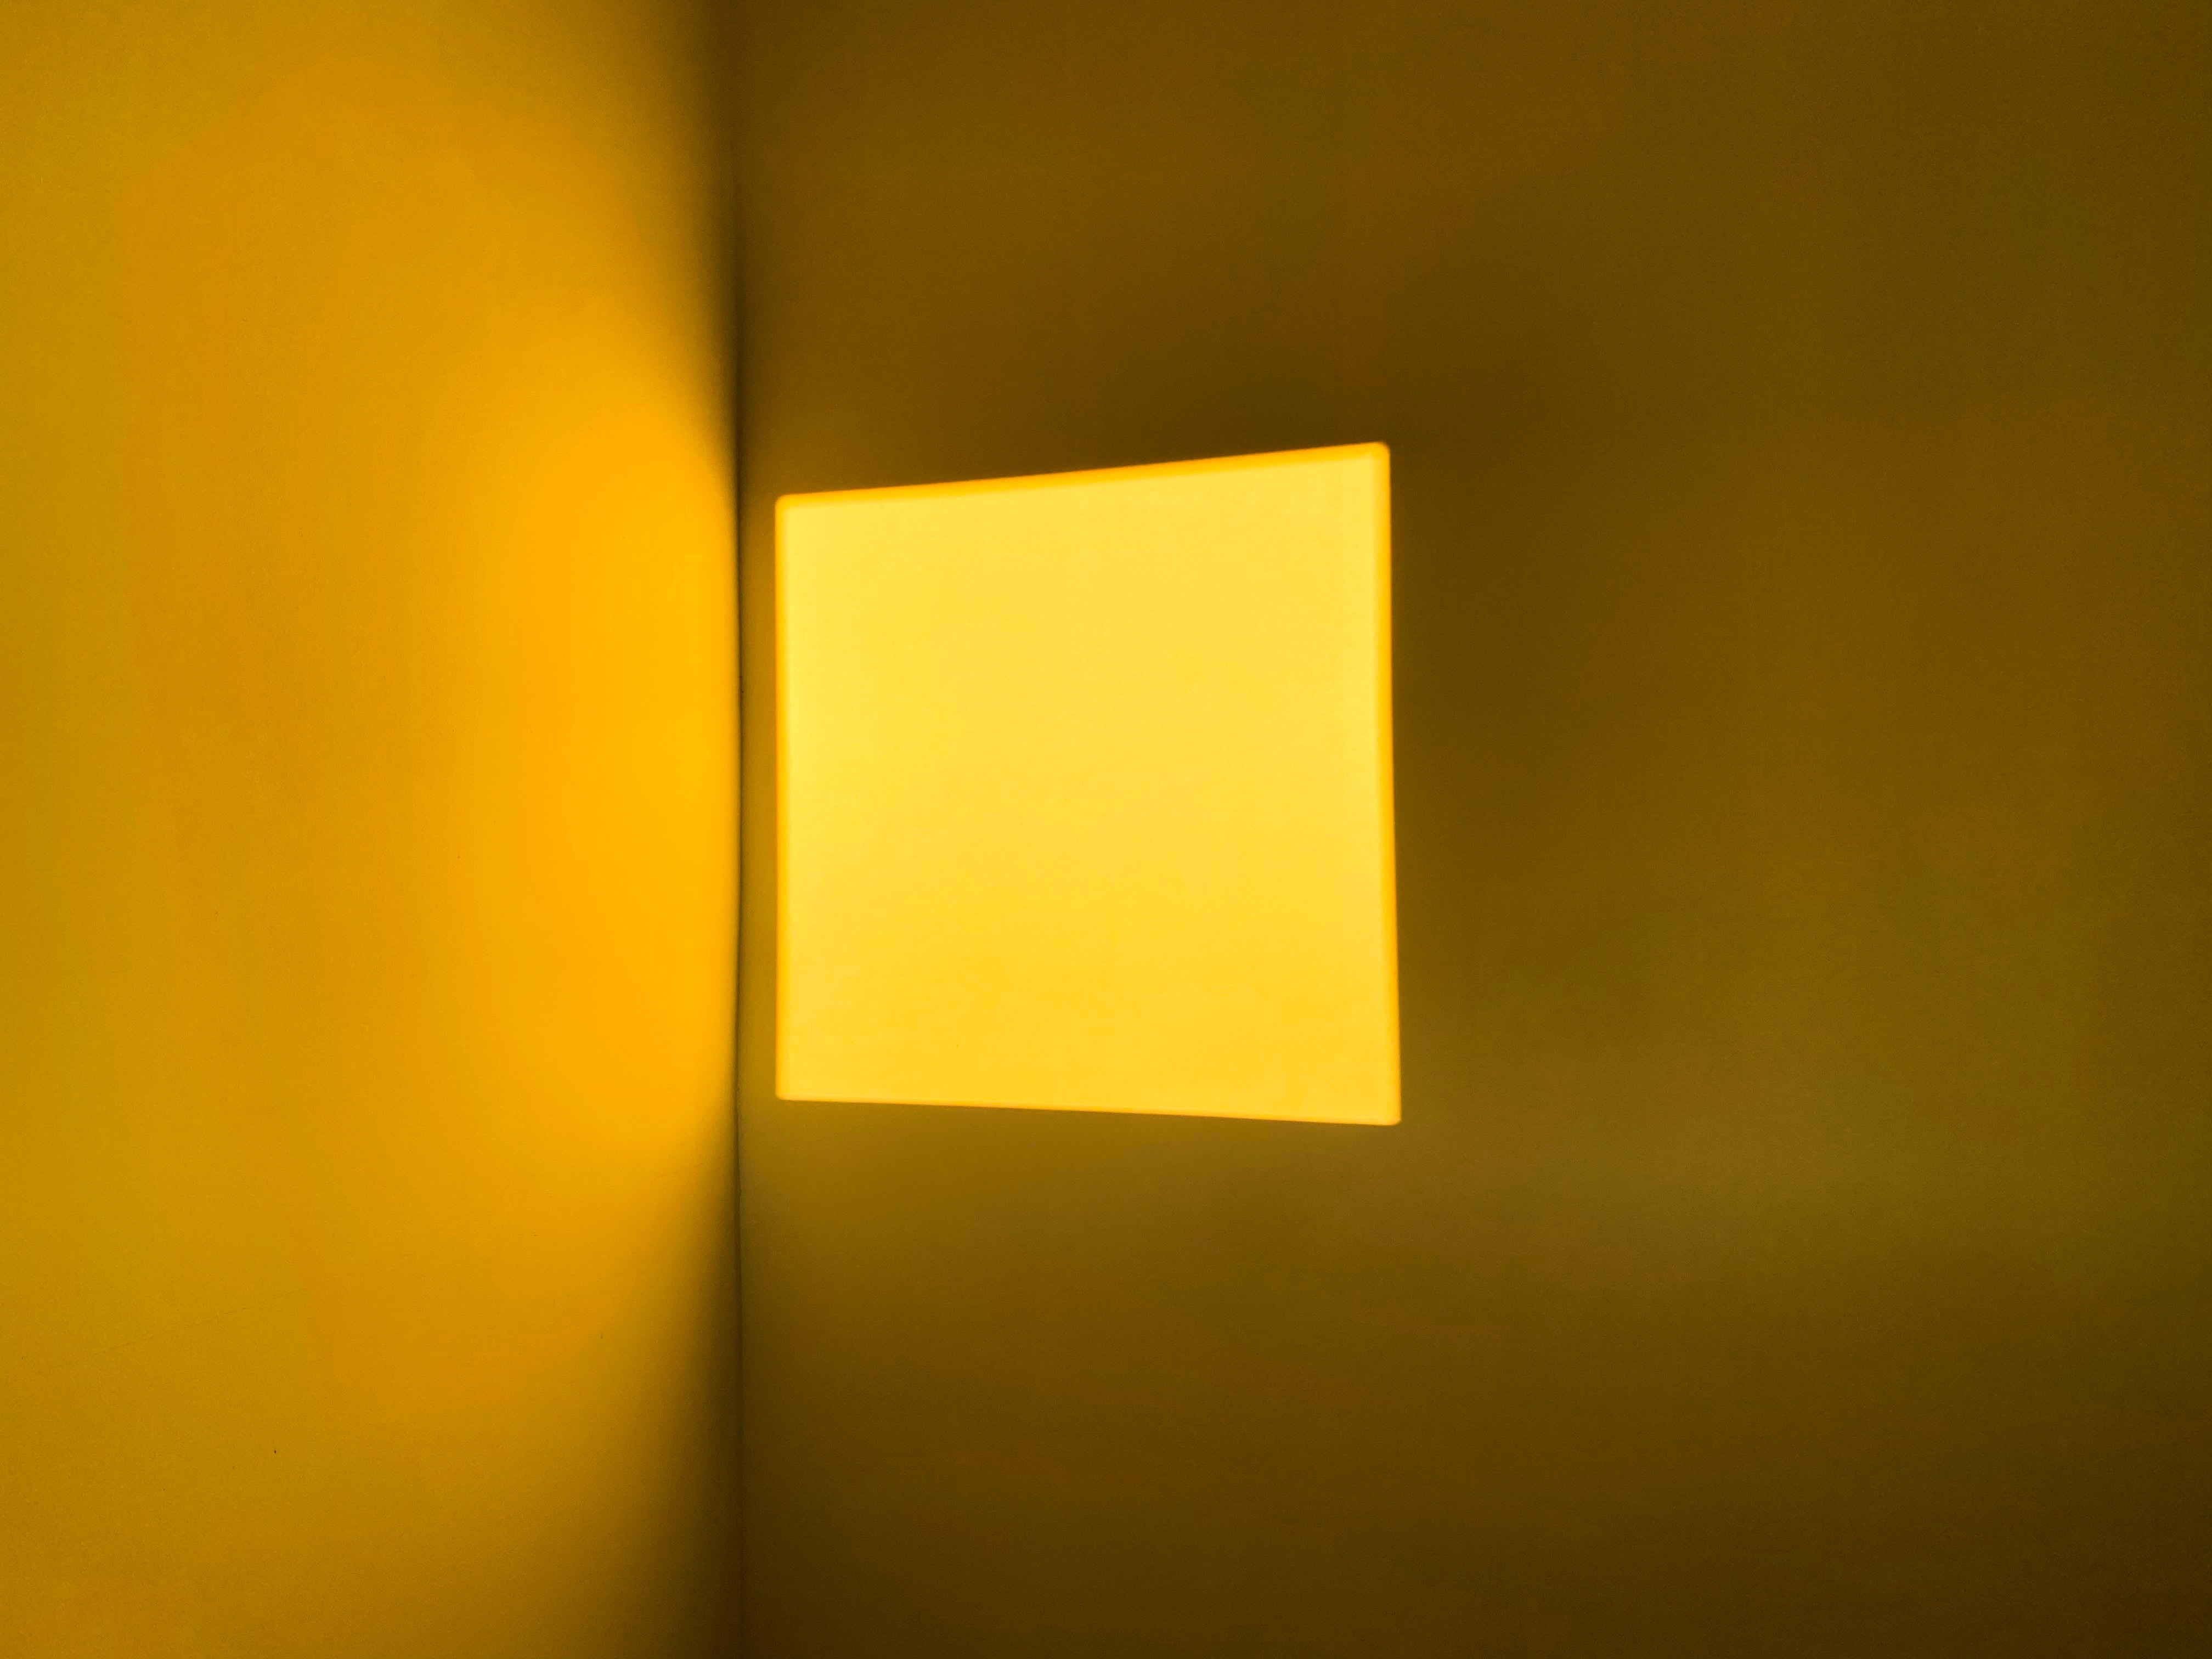 Fotos eines gelben Quadrats